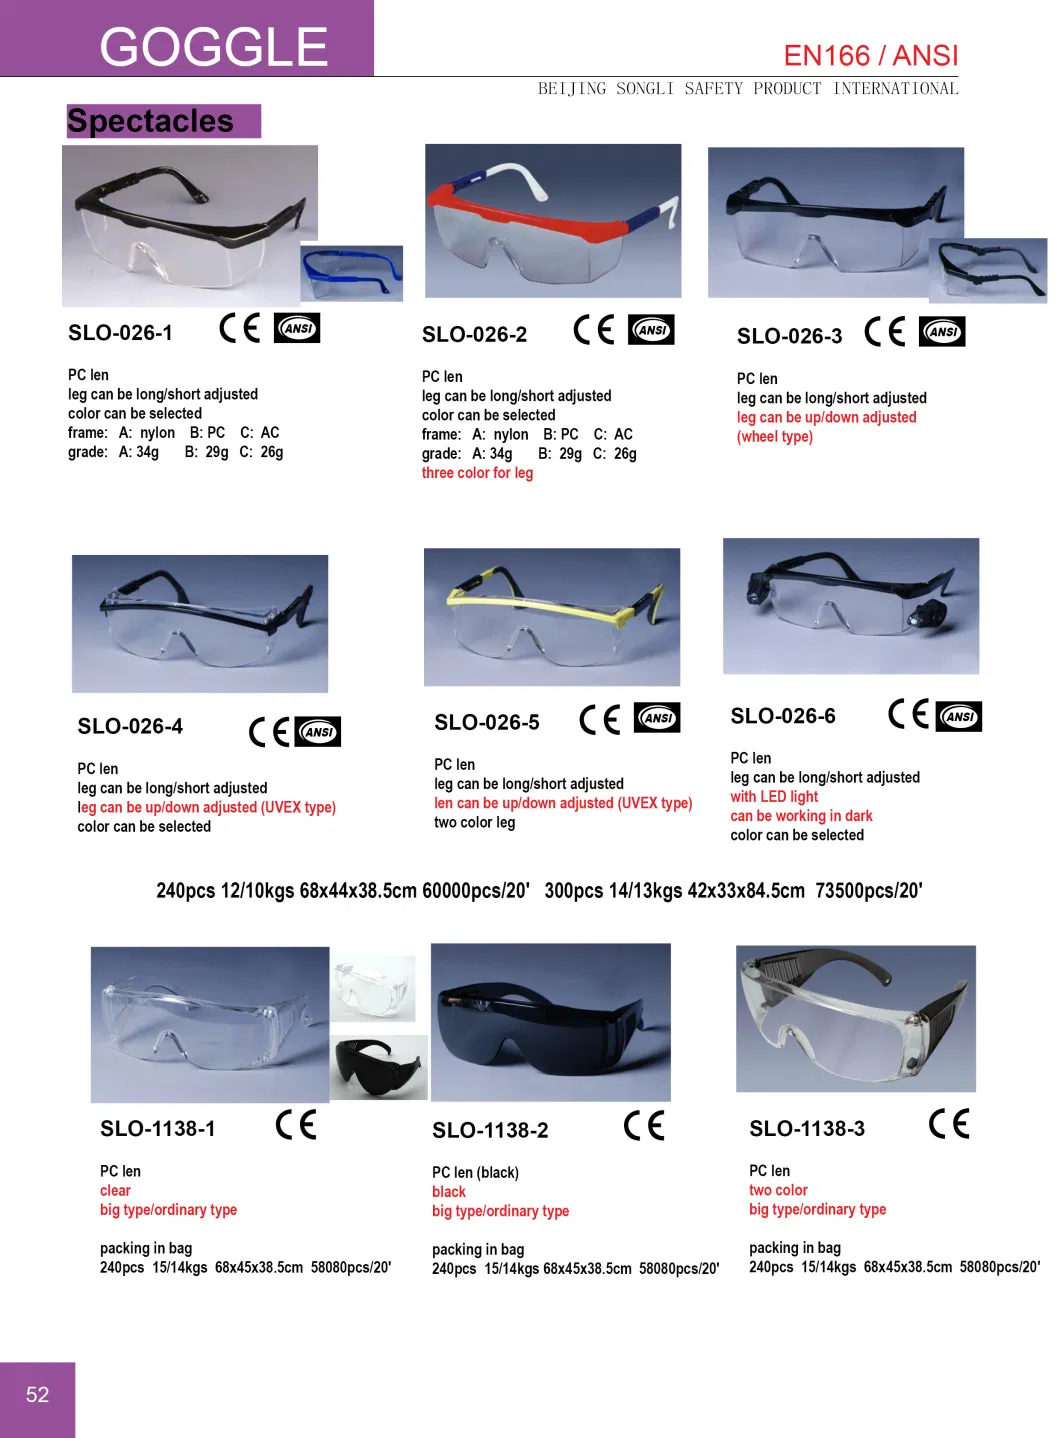 Slo-Em-100 Protective Eye Wear Eye Protection Goggle Safety Glasses Auto Darken Welding Glasses